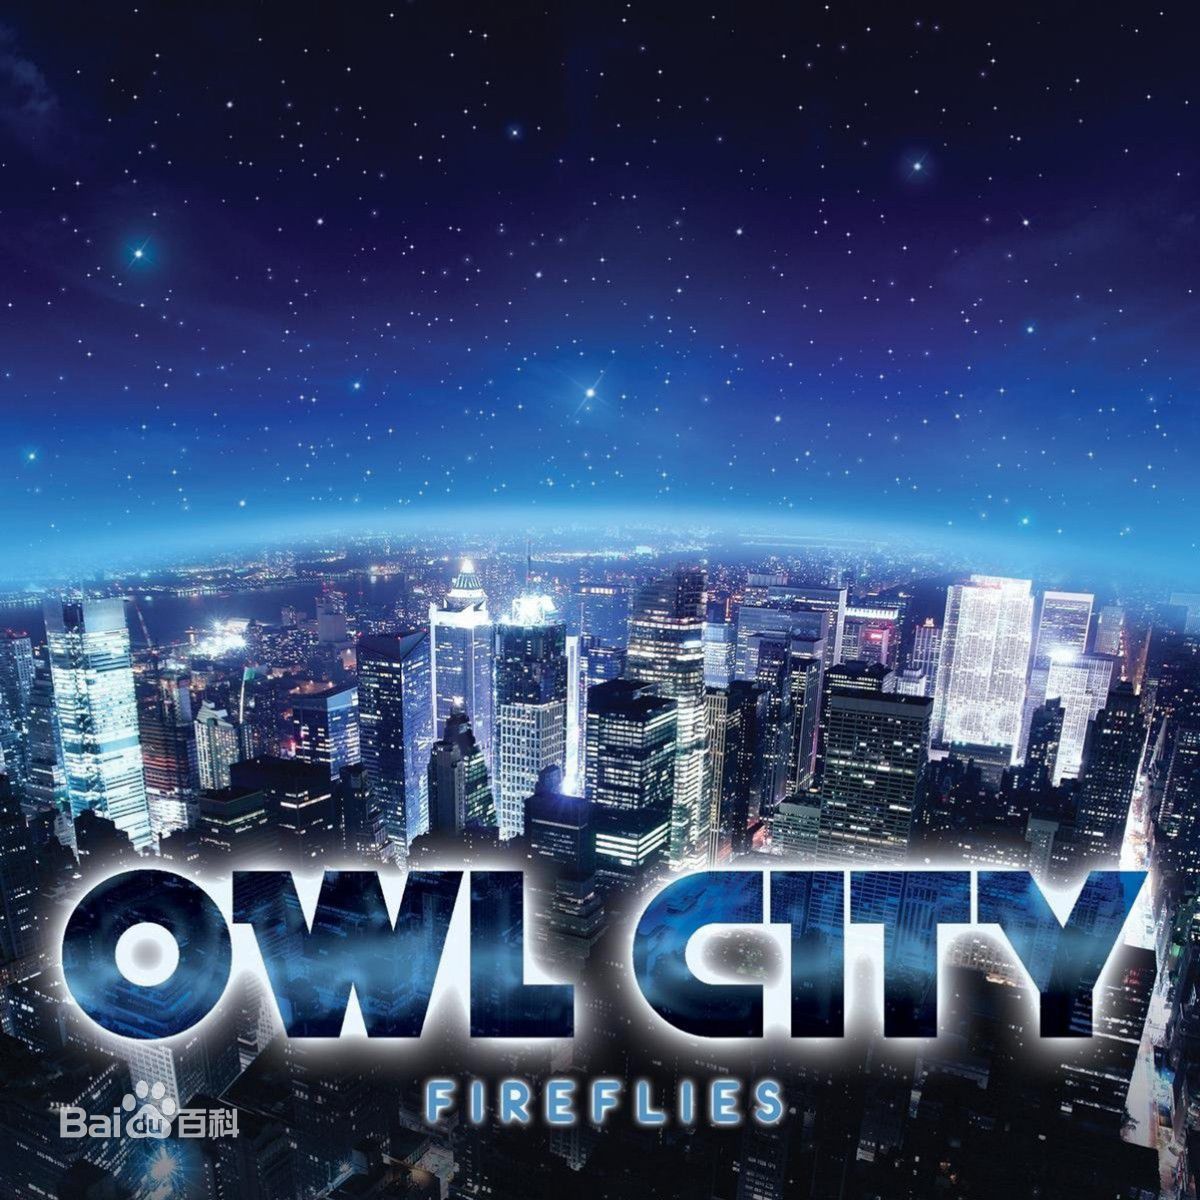 Fireflies(Owl City演唱歌曲)